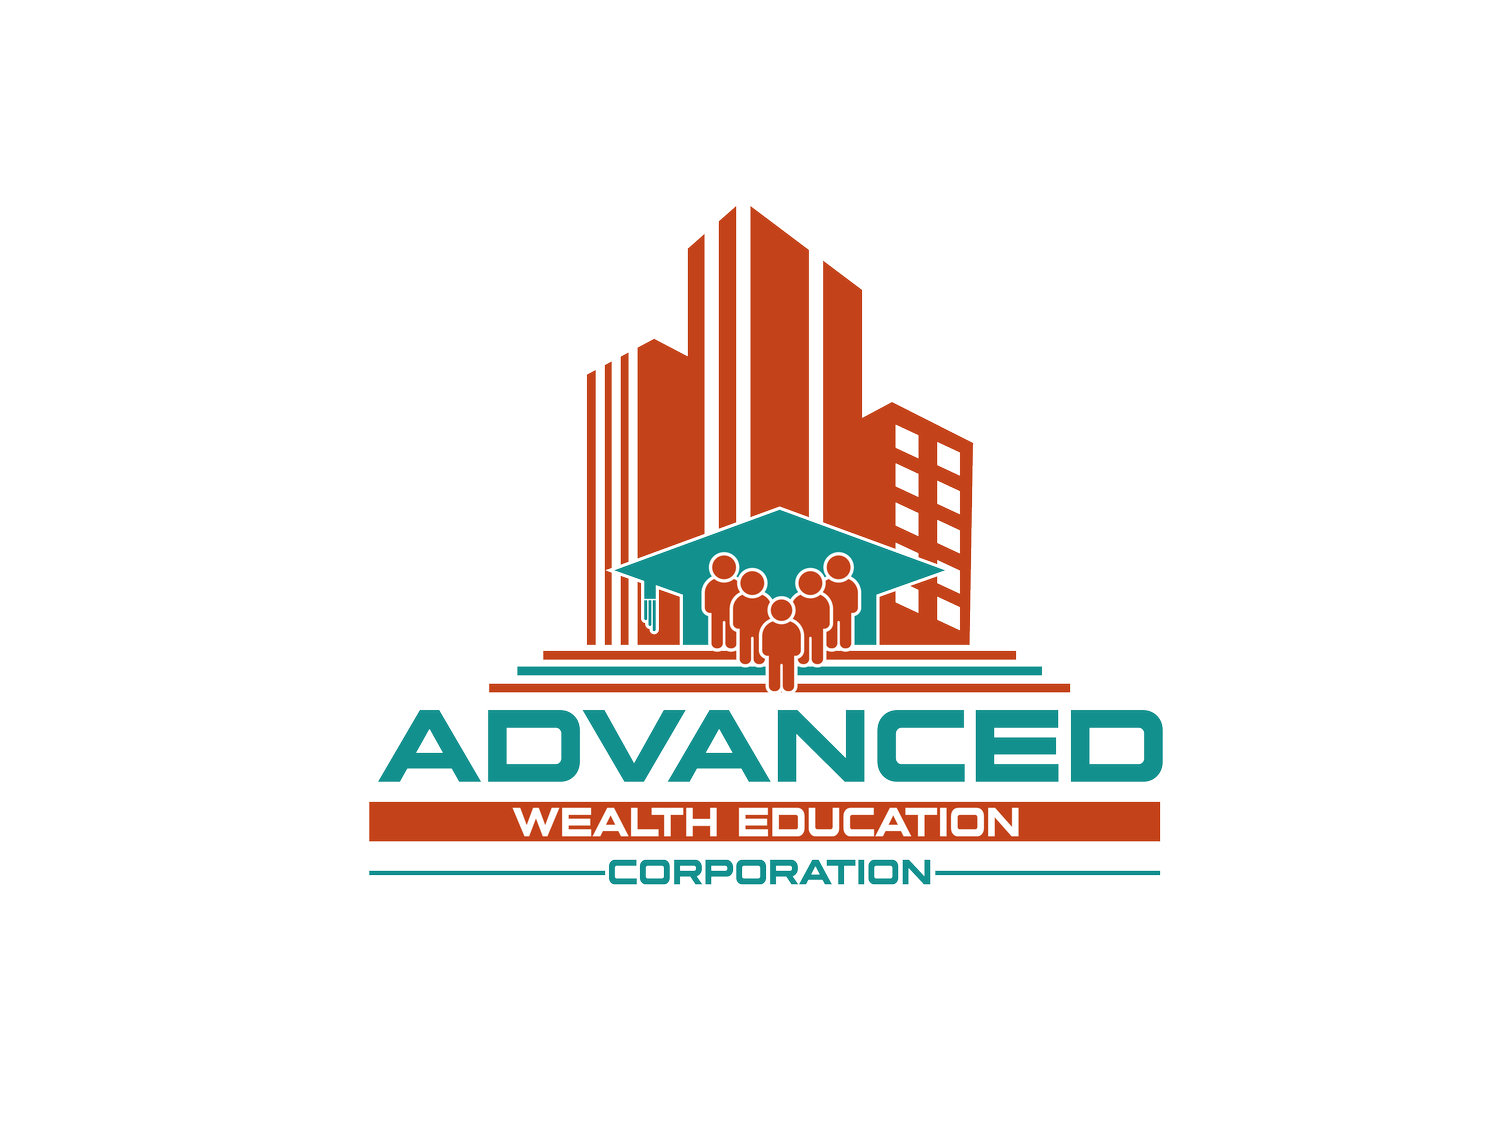 Advanced Wealth Education Corporation